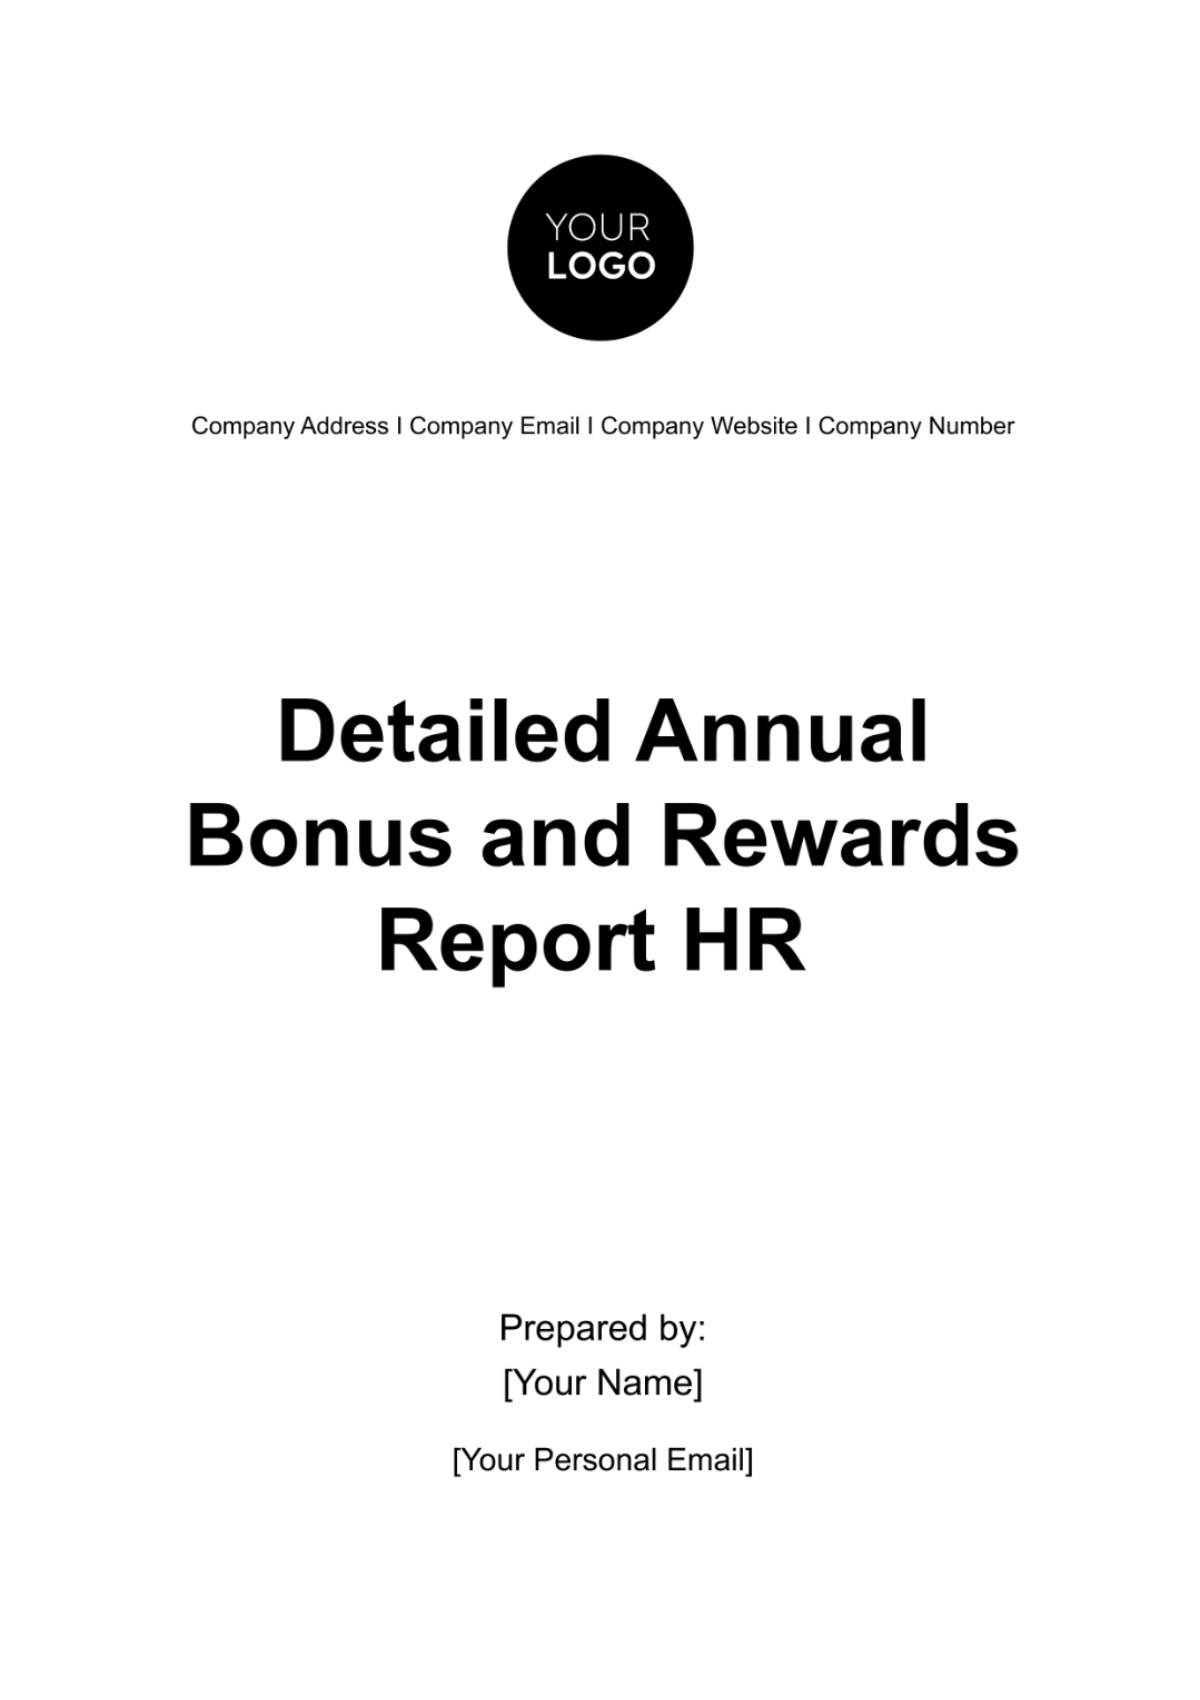 Free Detailed Annual Bonus and Rewards Report HR Template